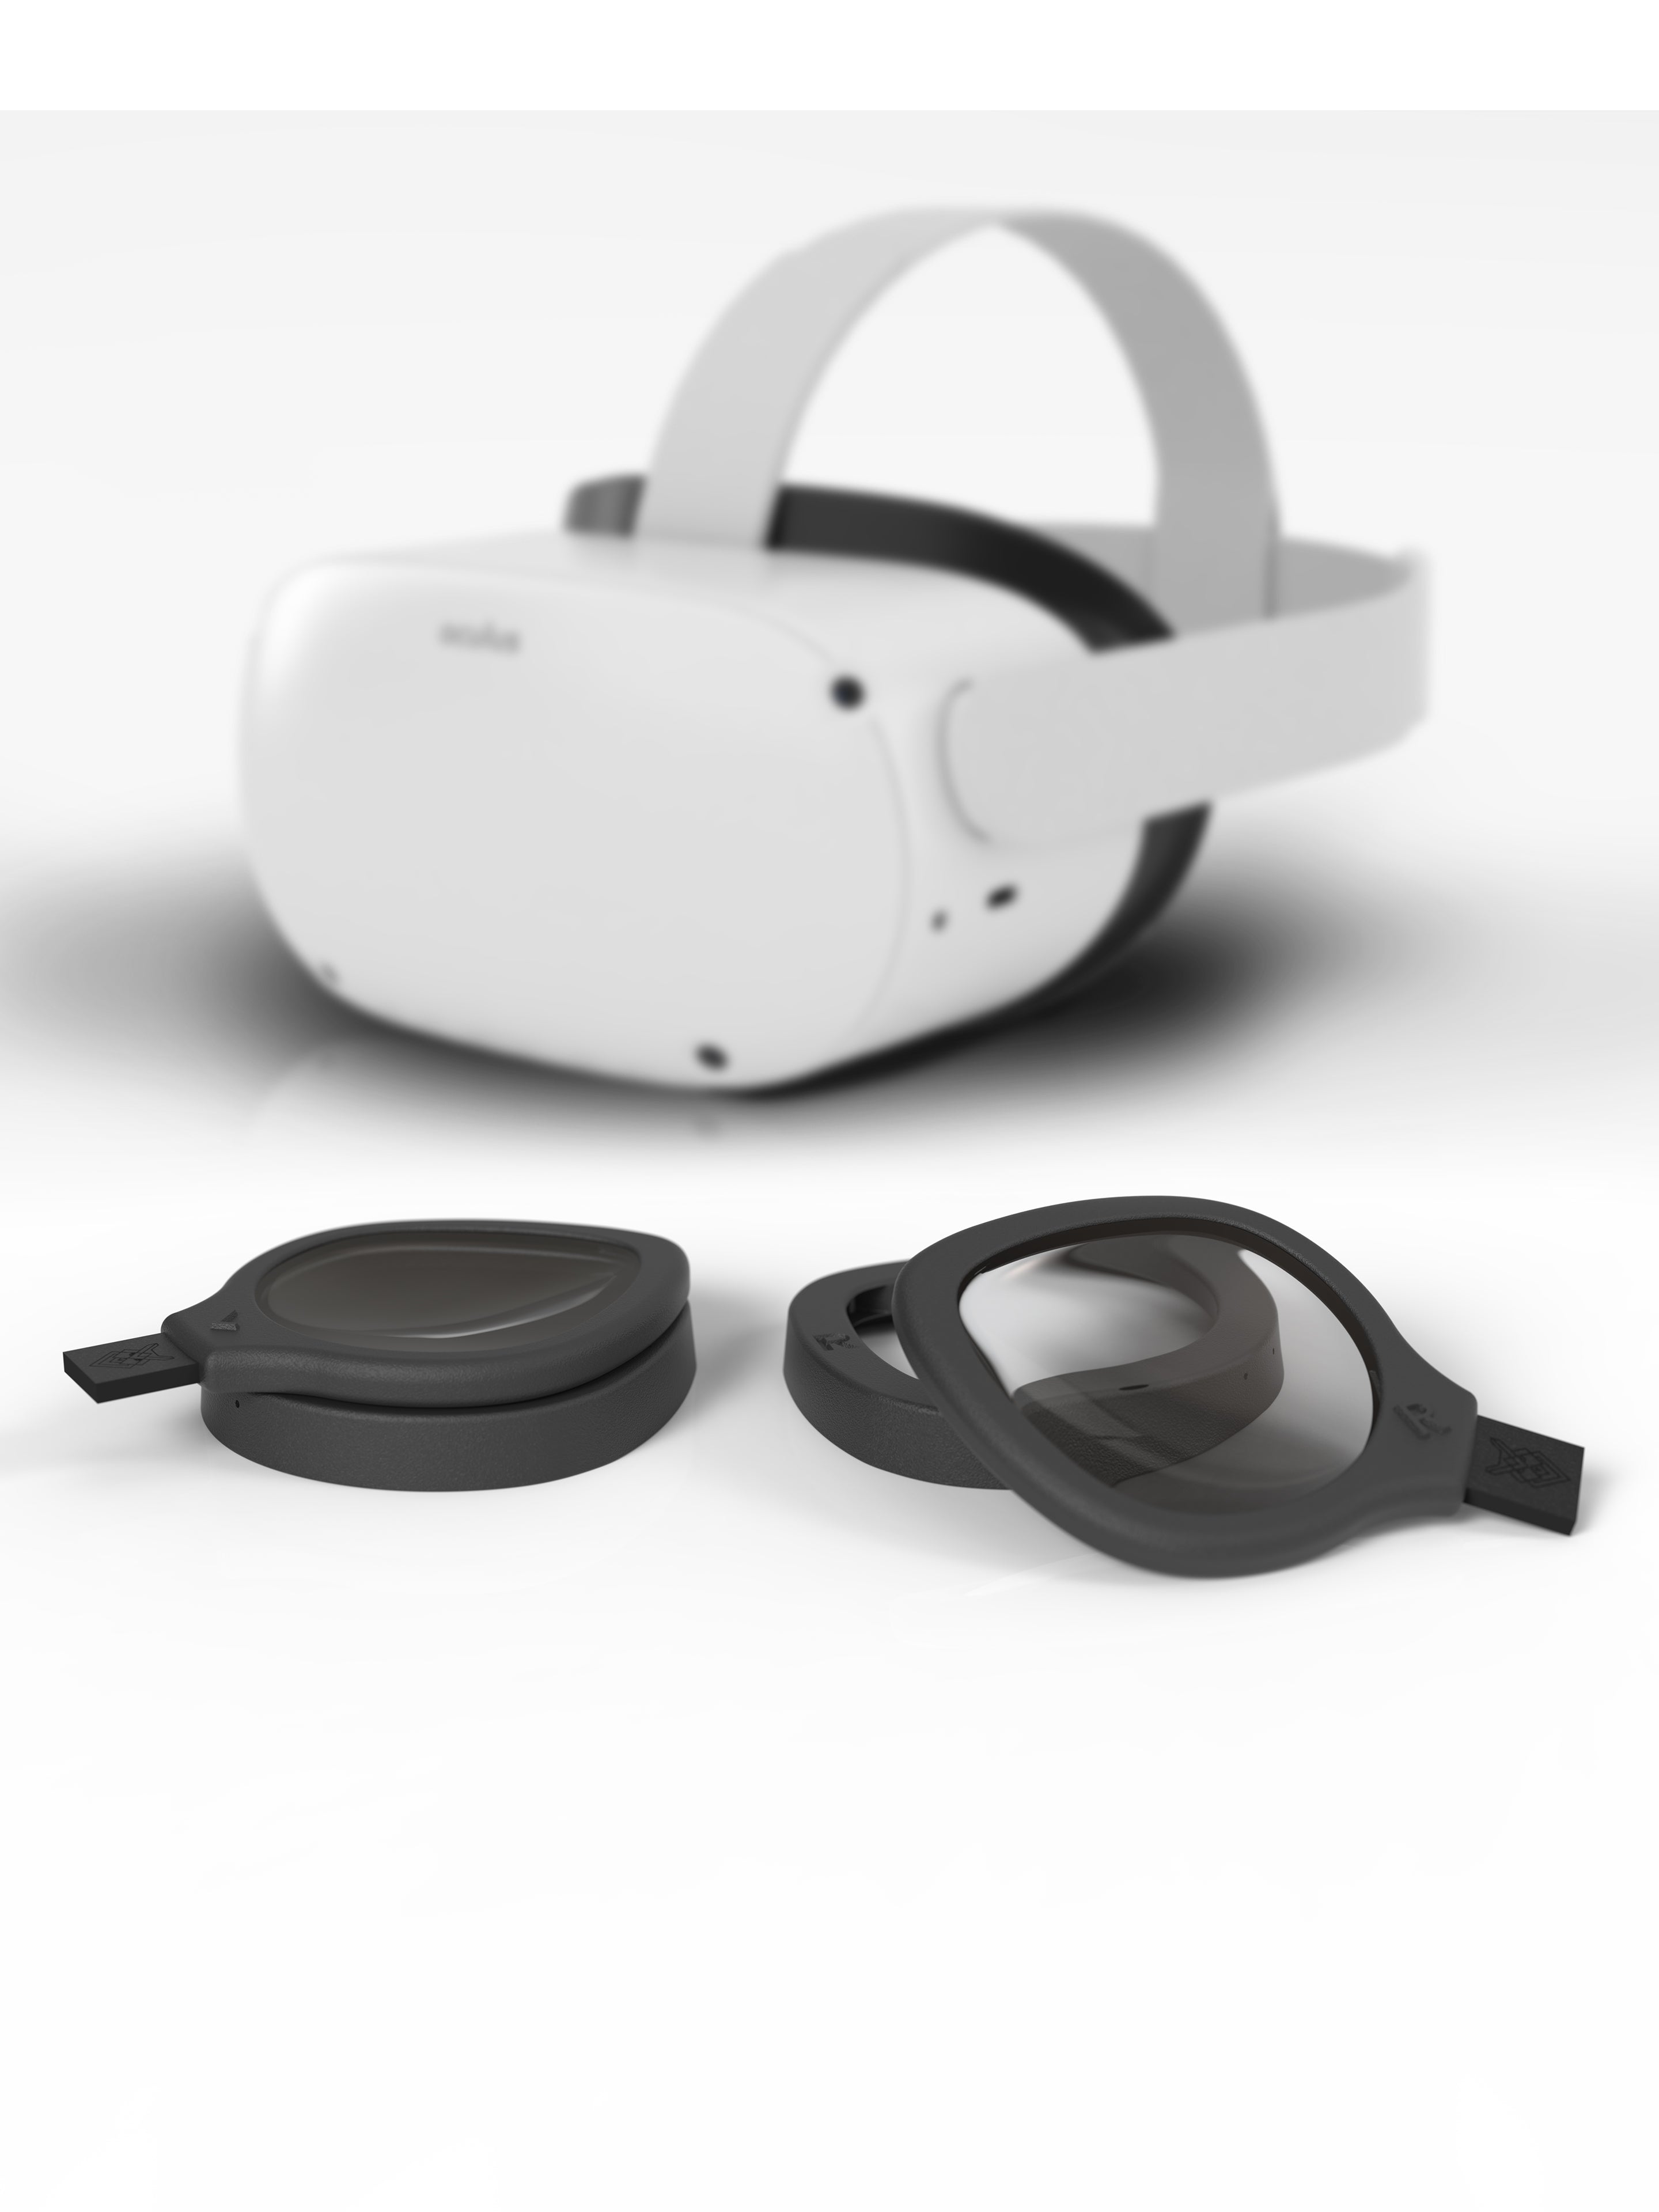 Reloptix Oculus/Meta Quest 2 Non-Prescription Lens Inserts kit